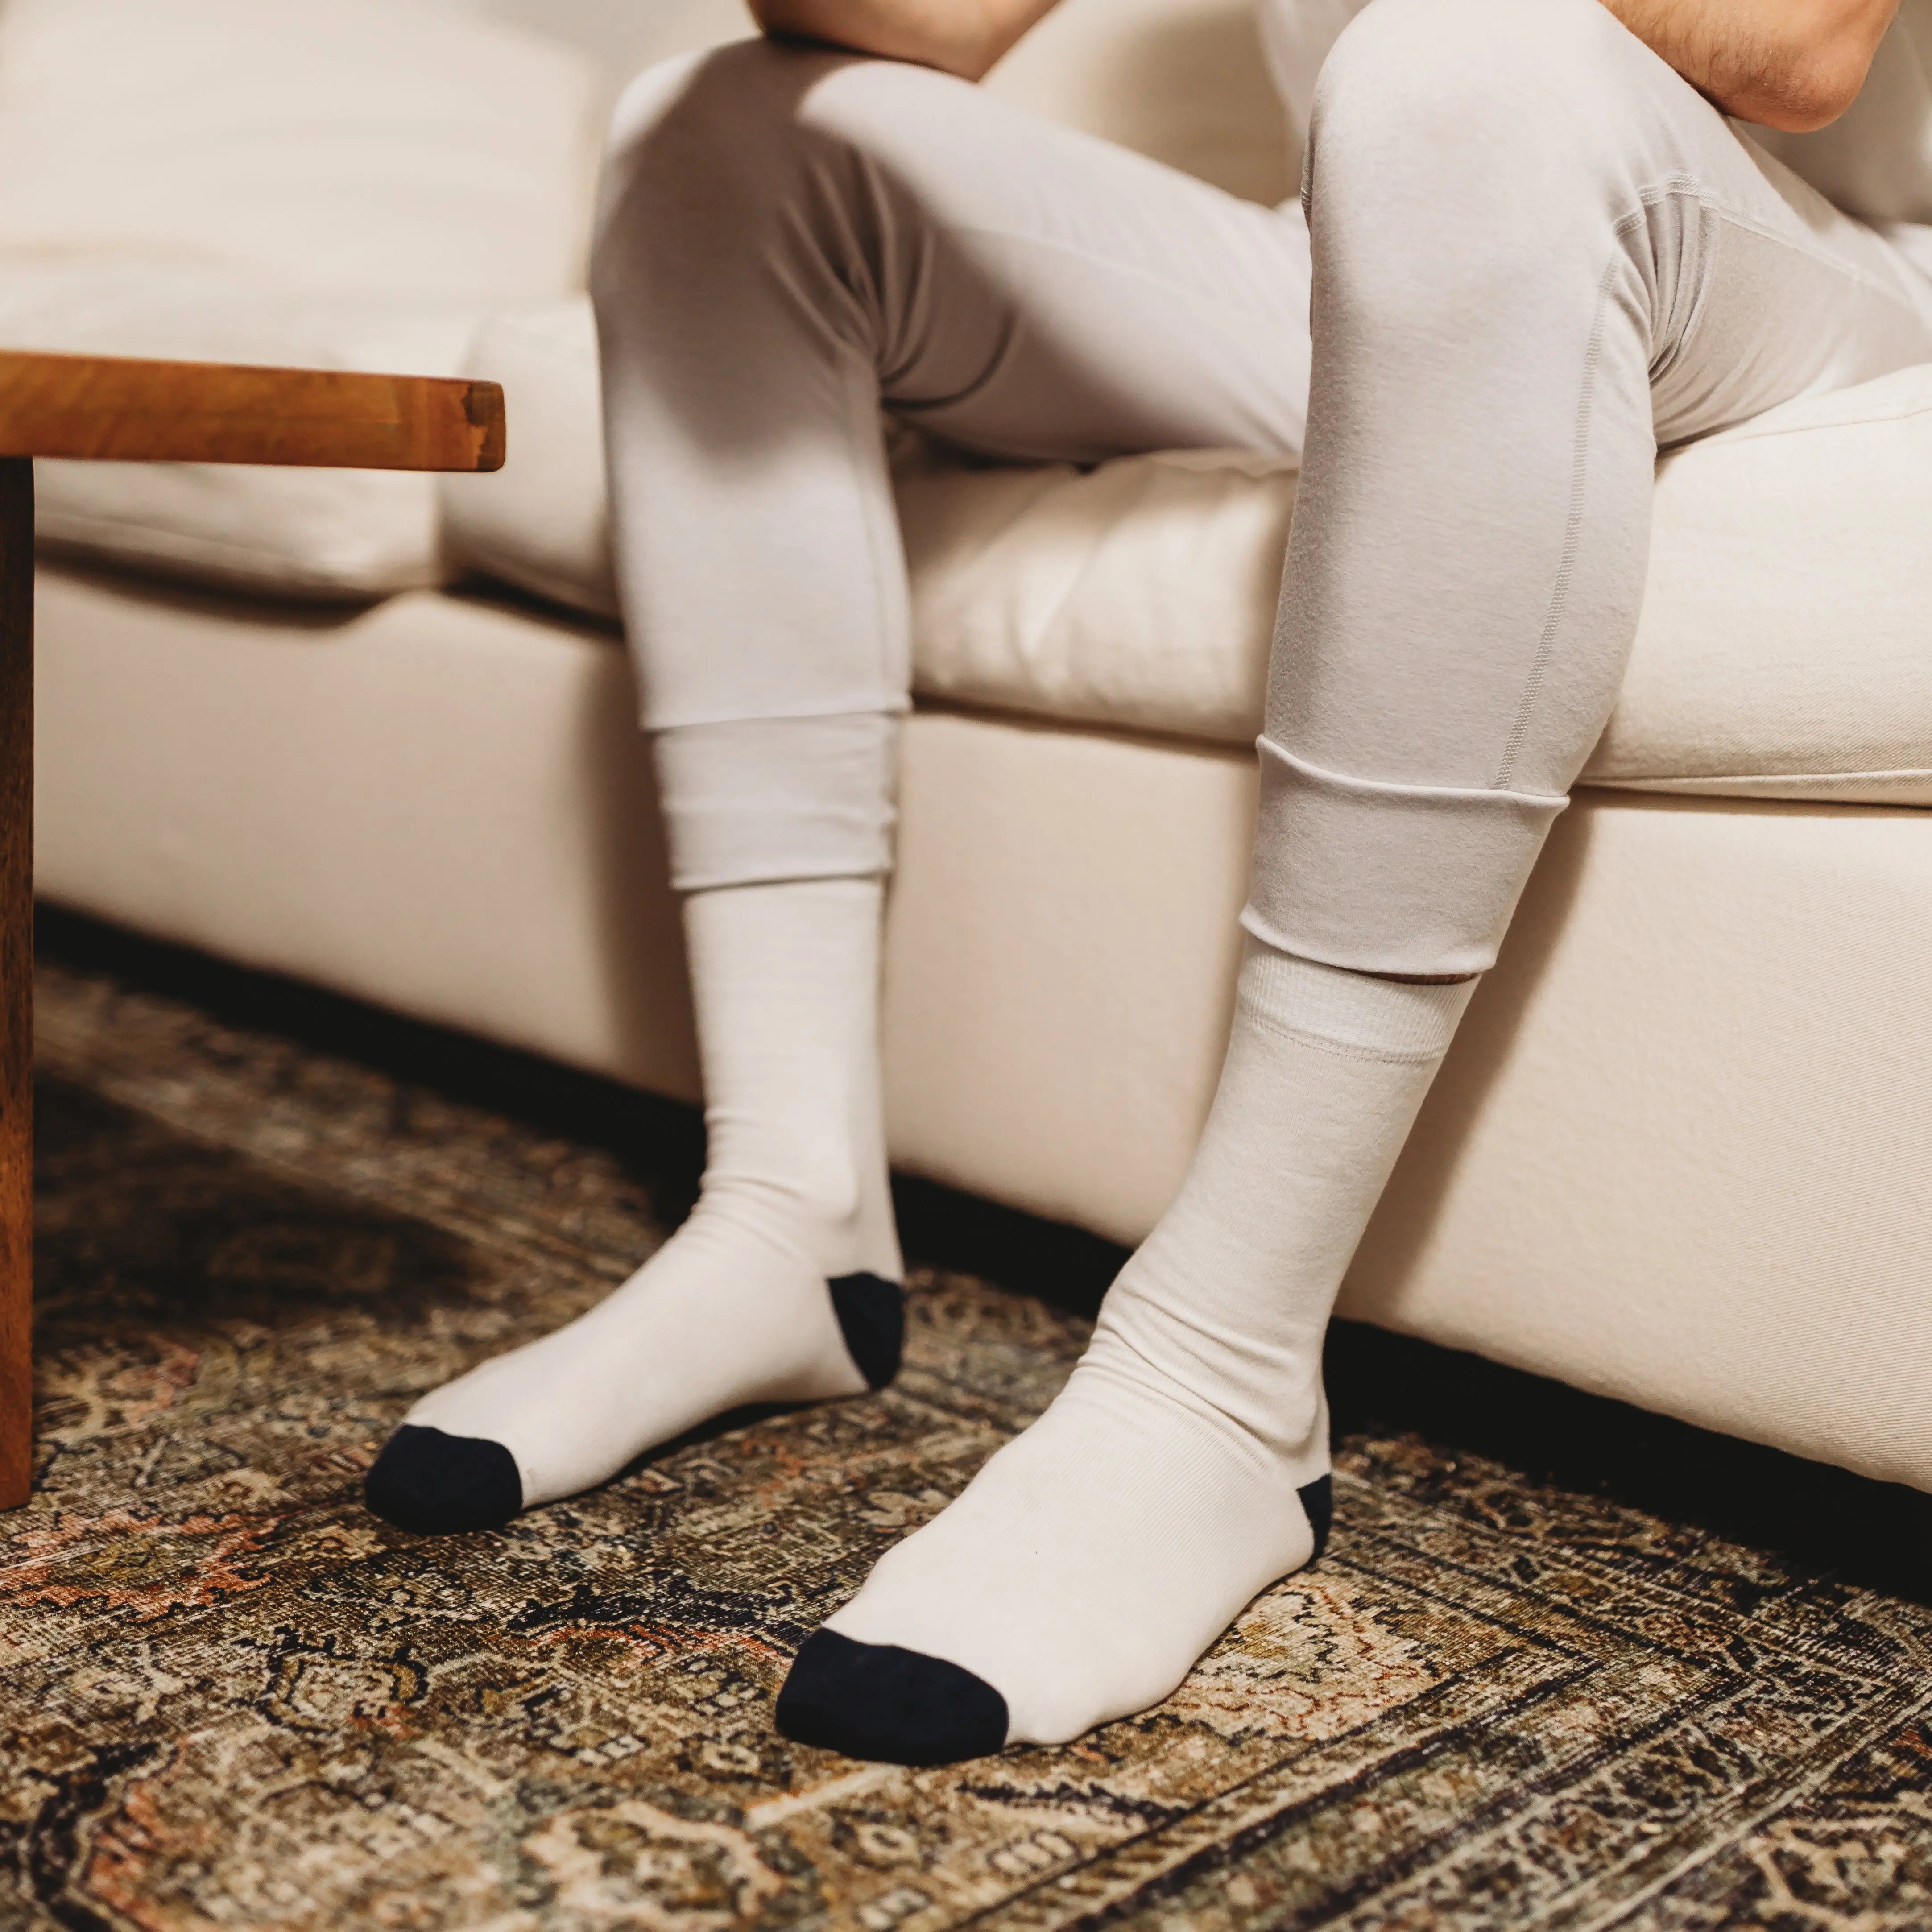 Women's Trouser Socks, Dress Style, Rib Pattern: 15-20 mmHg, White, X-Large  - Walmart.com